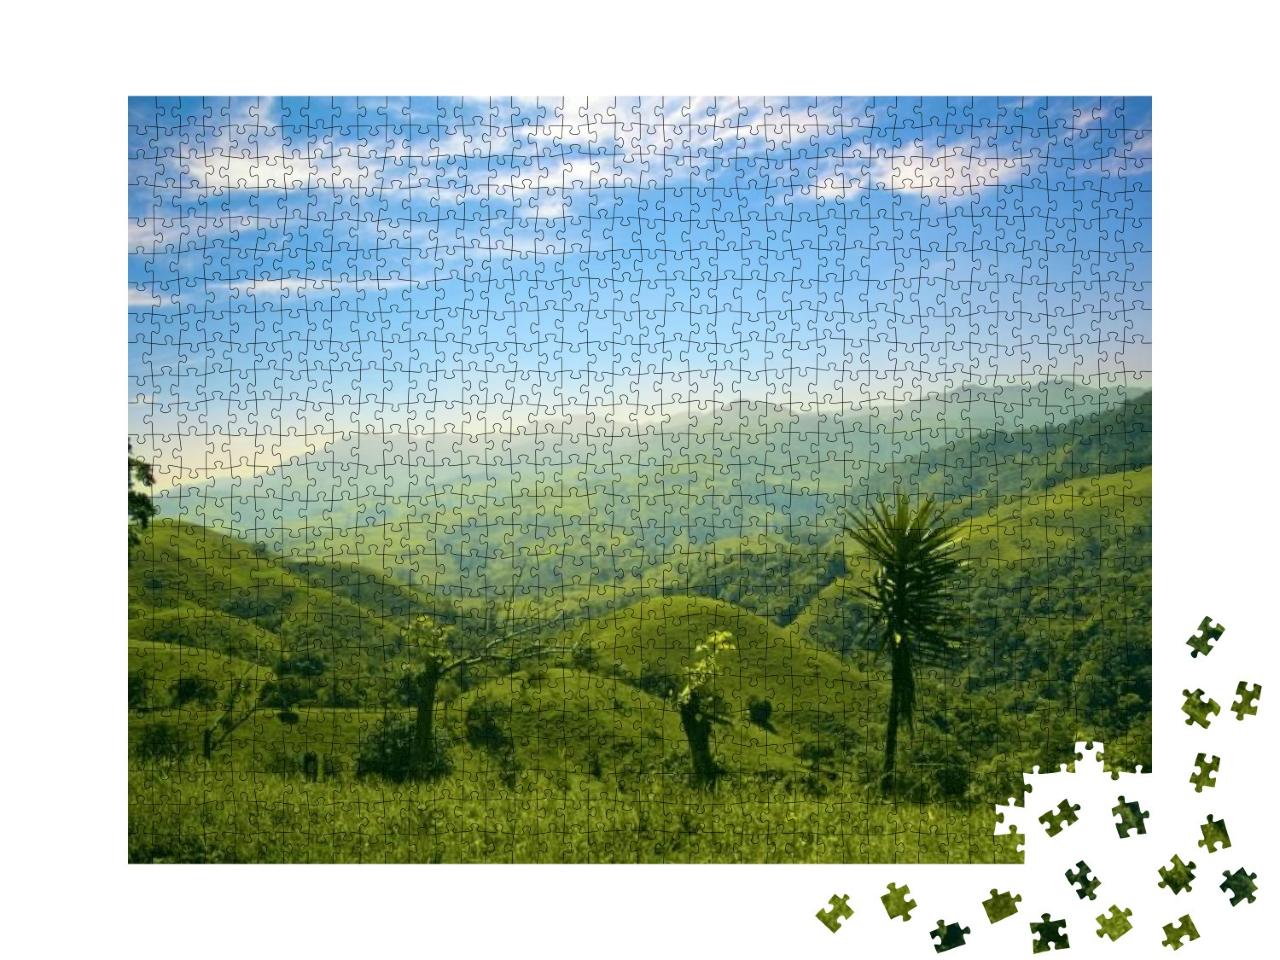 Puzzle 1000 Teile „Grüne Hügel und Berge in Costa Rica“